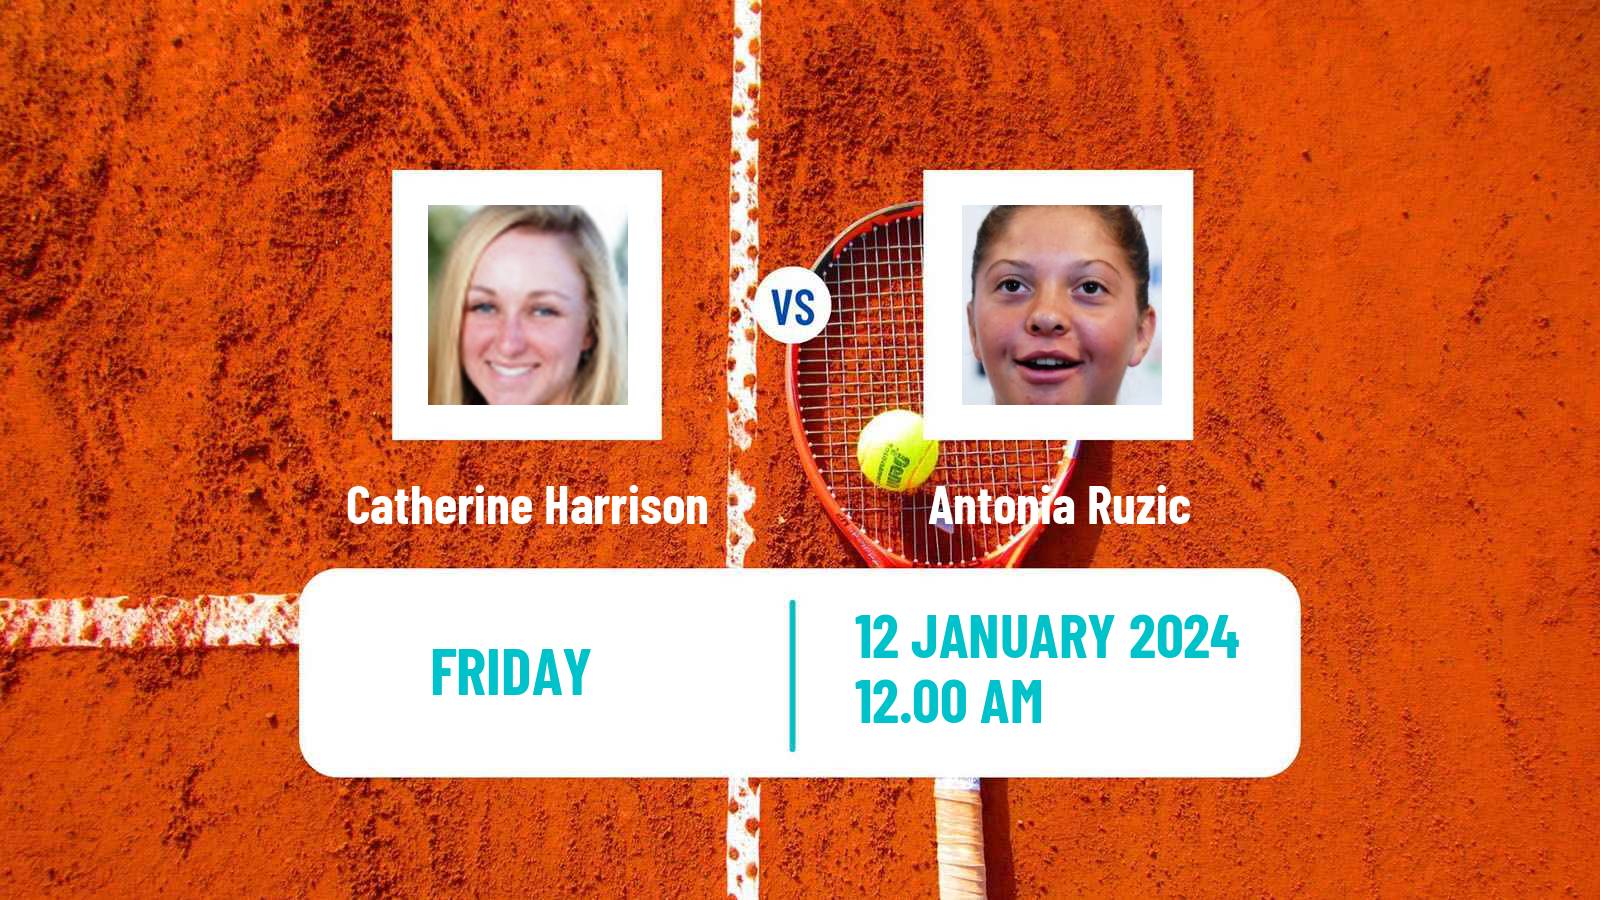 Tennis ITF W50 Nonthaburi 2 Women Catherine Harrison - Antonia Ruzic